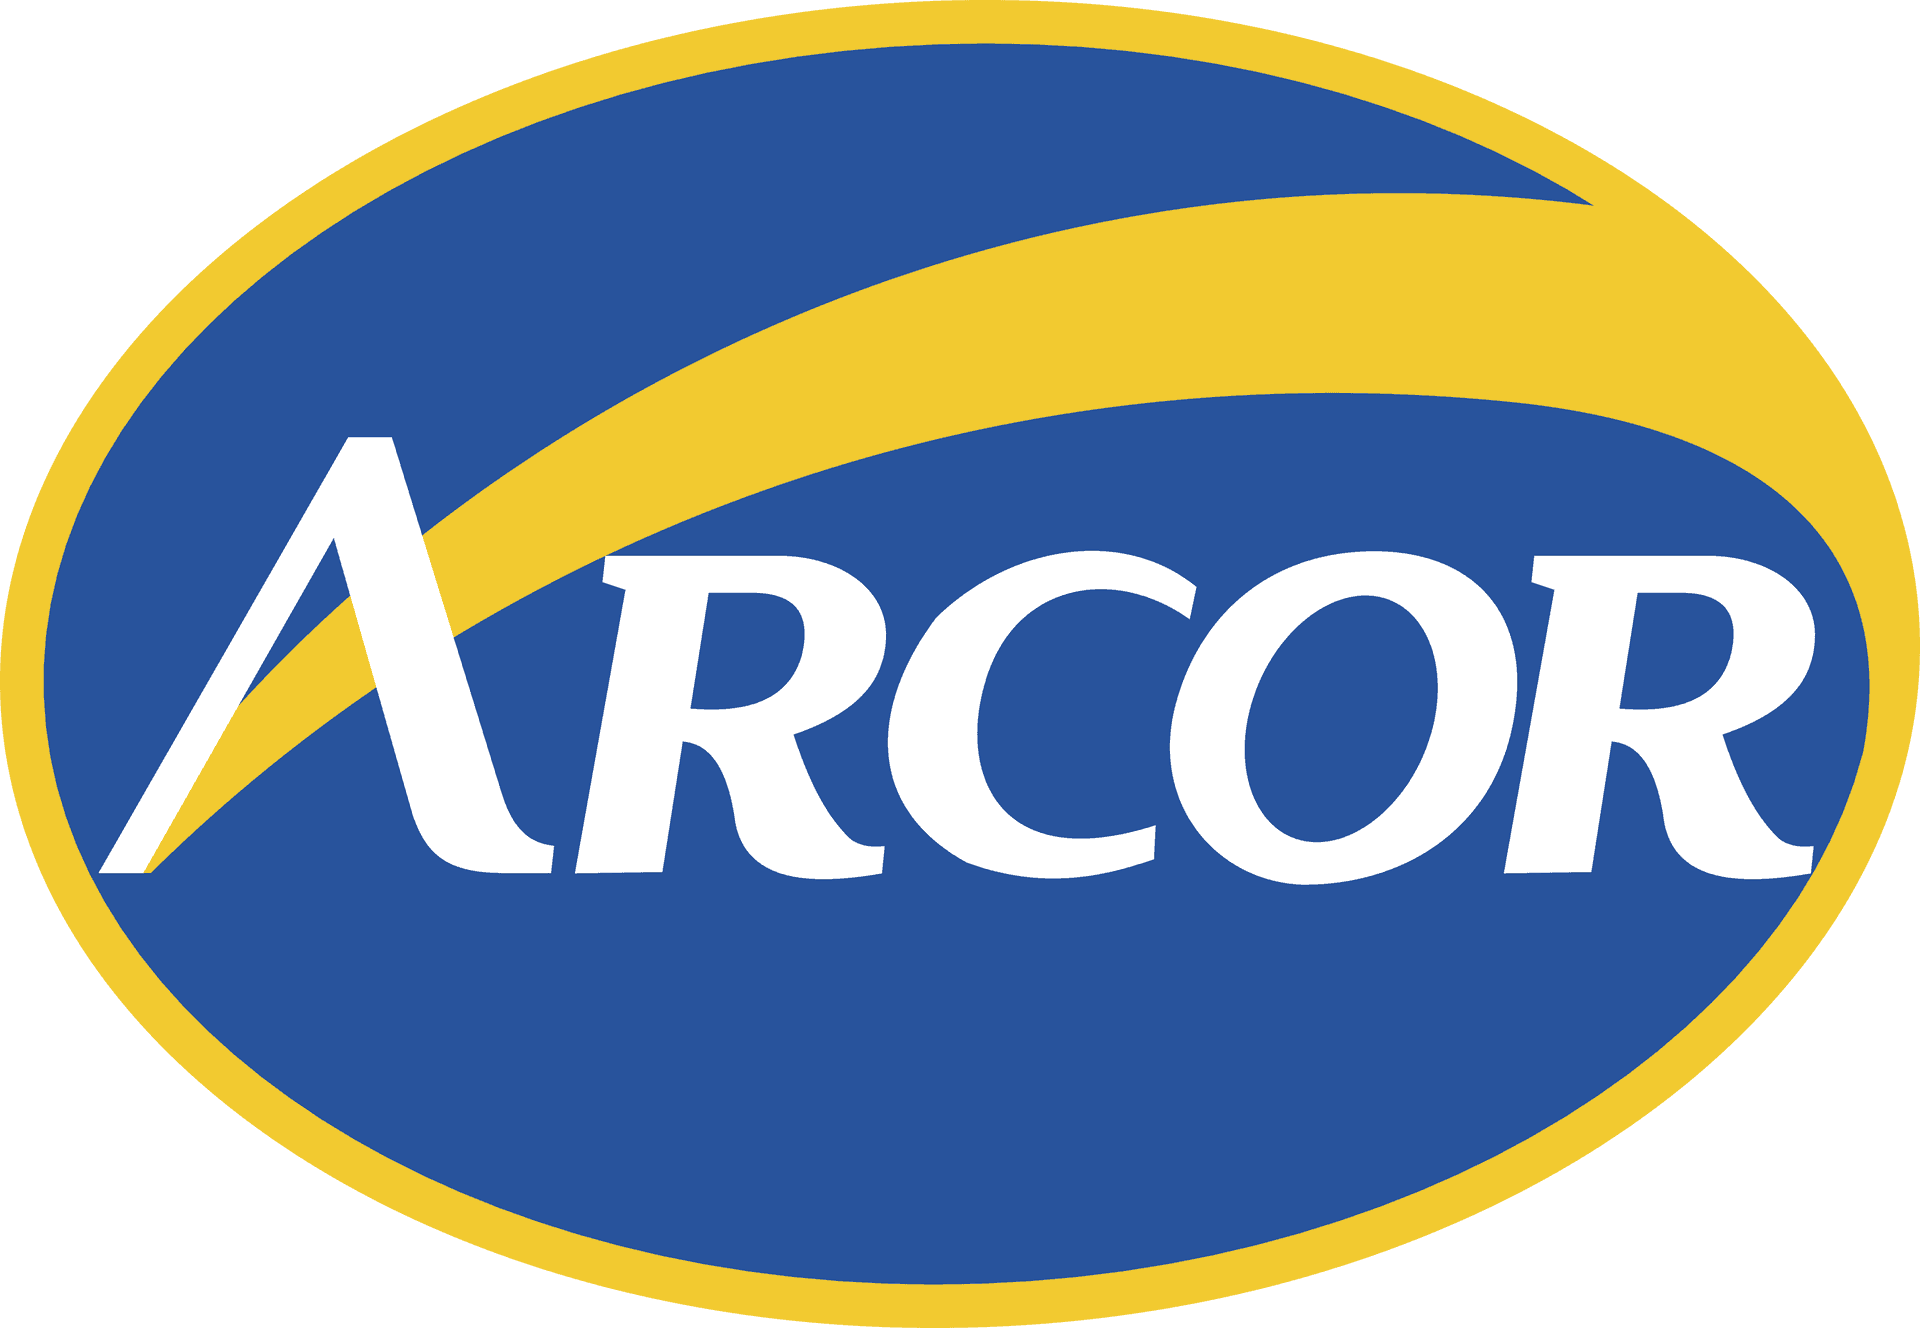 Arcor Logo Image PNG image